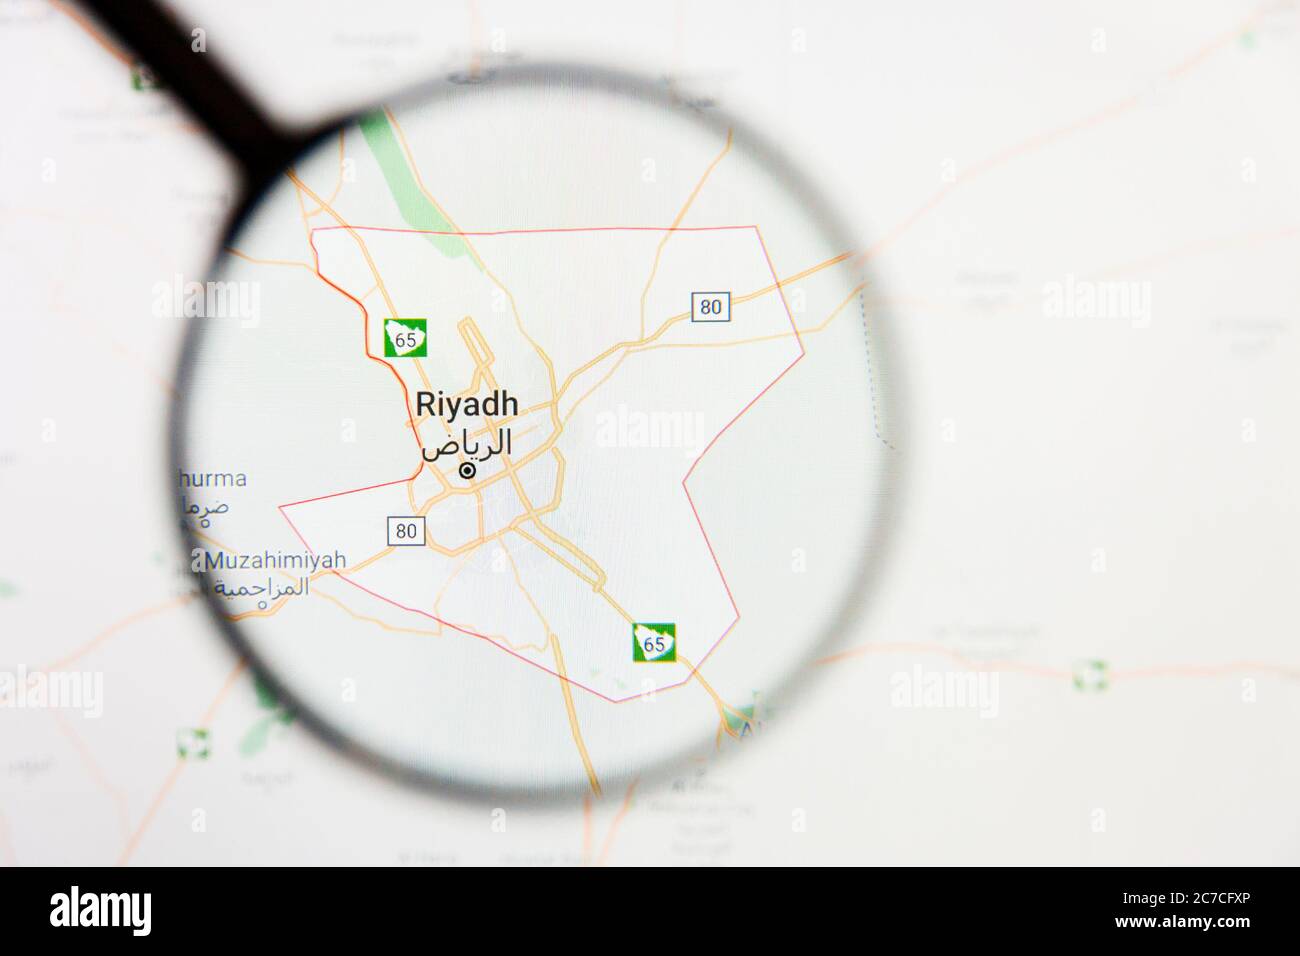 Riyadh, Saudi Arabia city visualization illustrative concept on display screen through magnifying glass Stock Photo